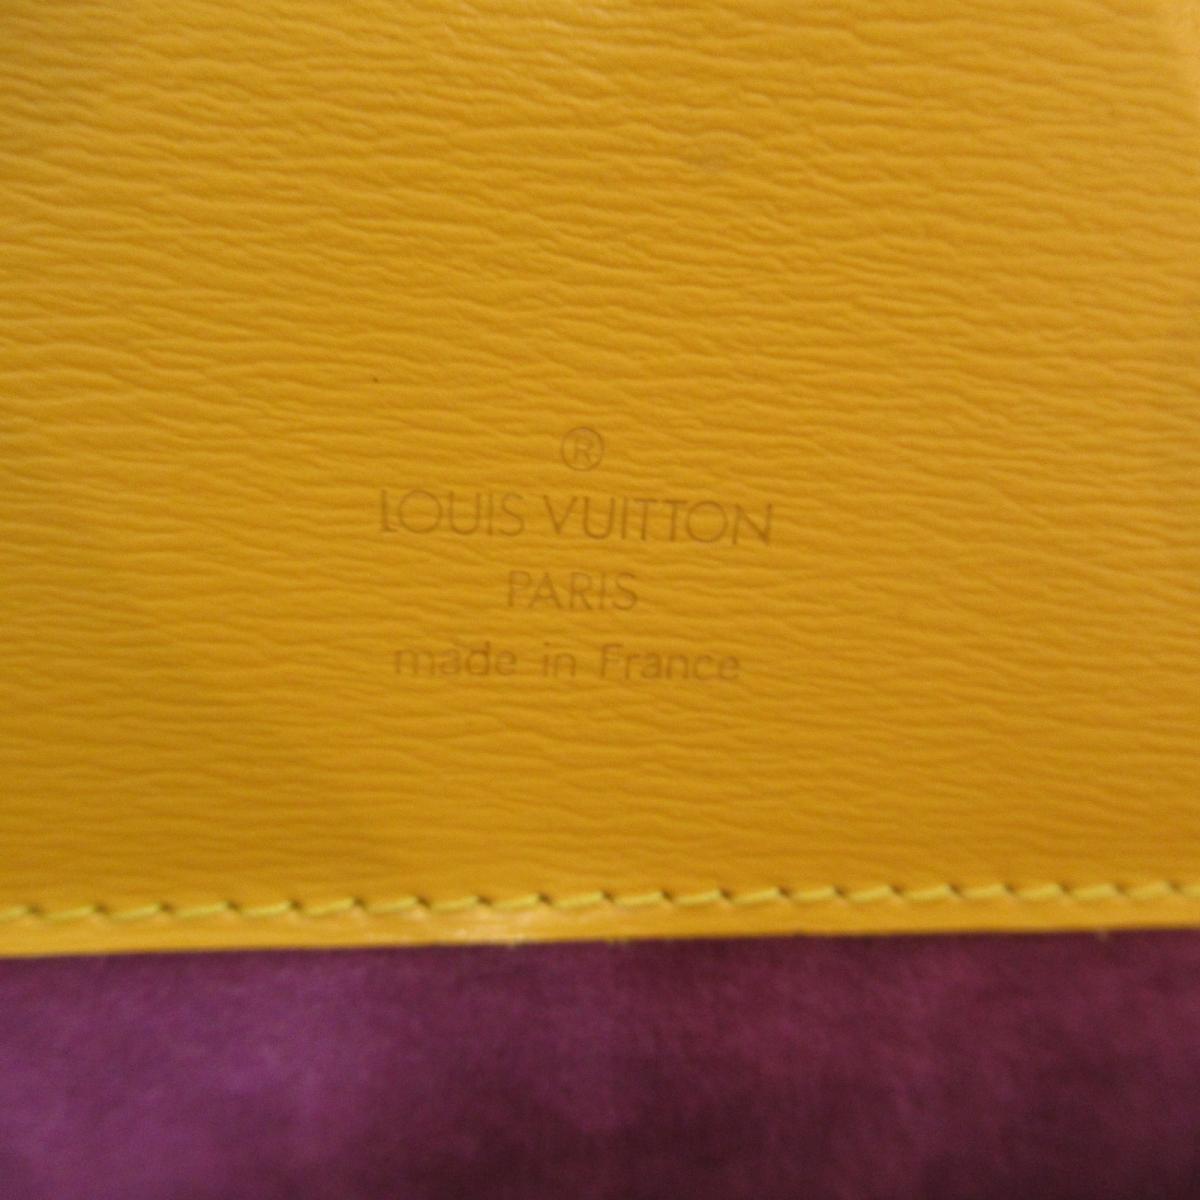 Louis Vuitton Epi Cluny M52259 One Shoulder Bag Free Shipping